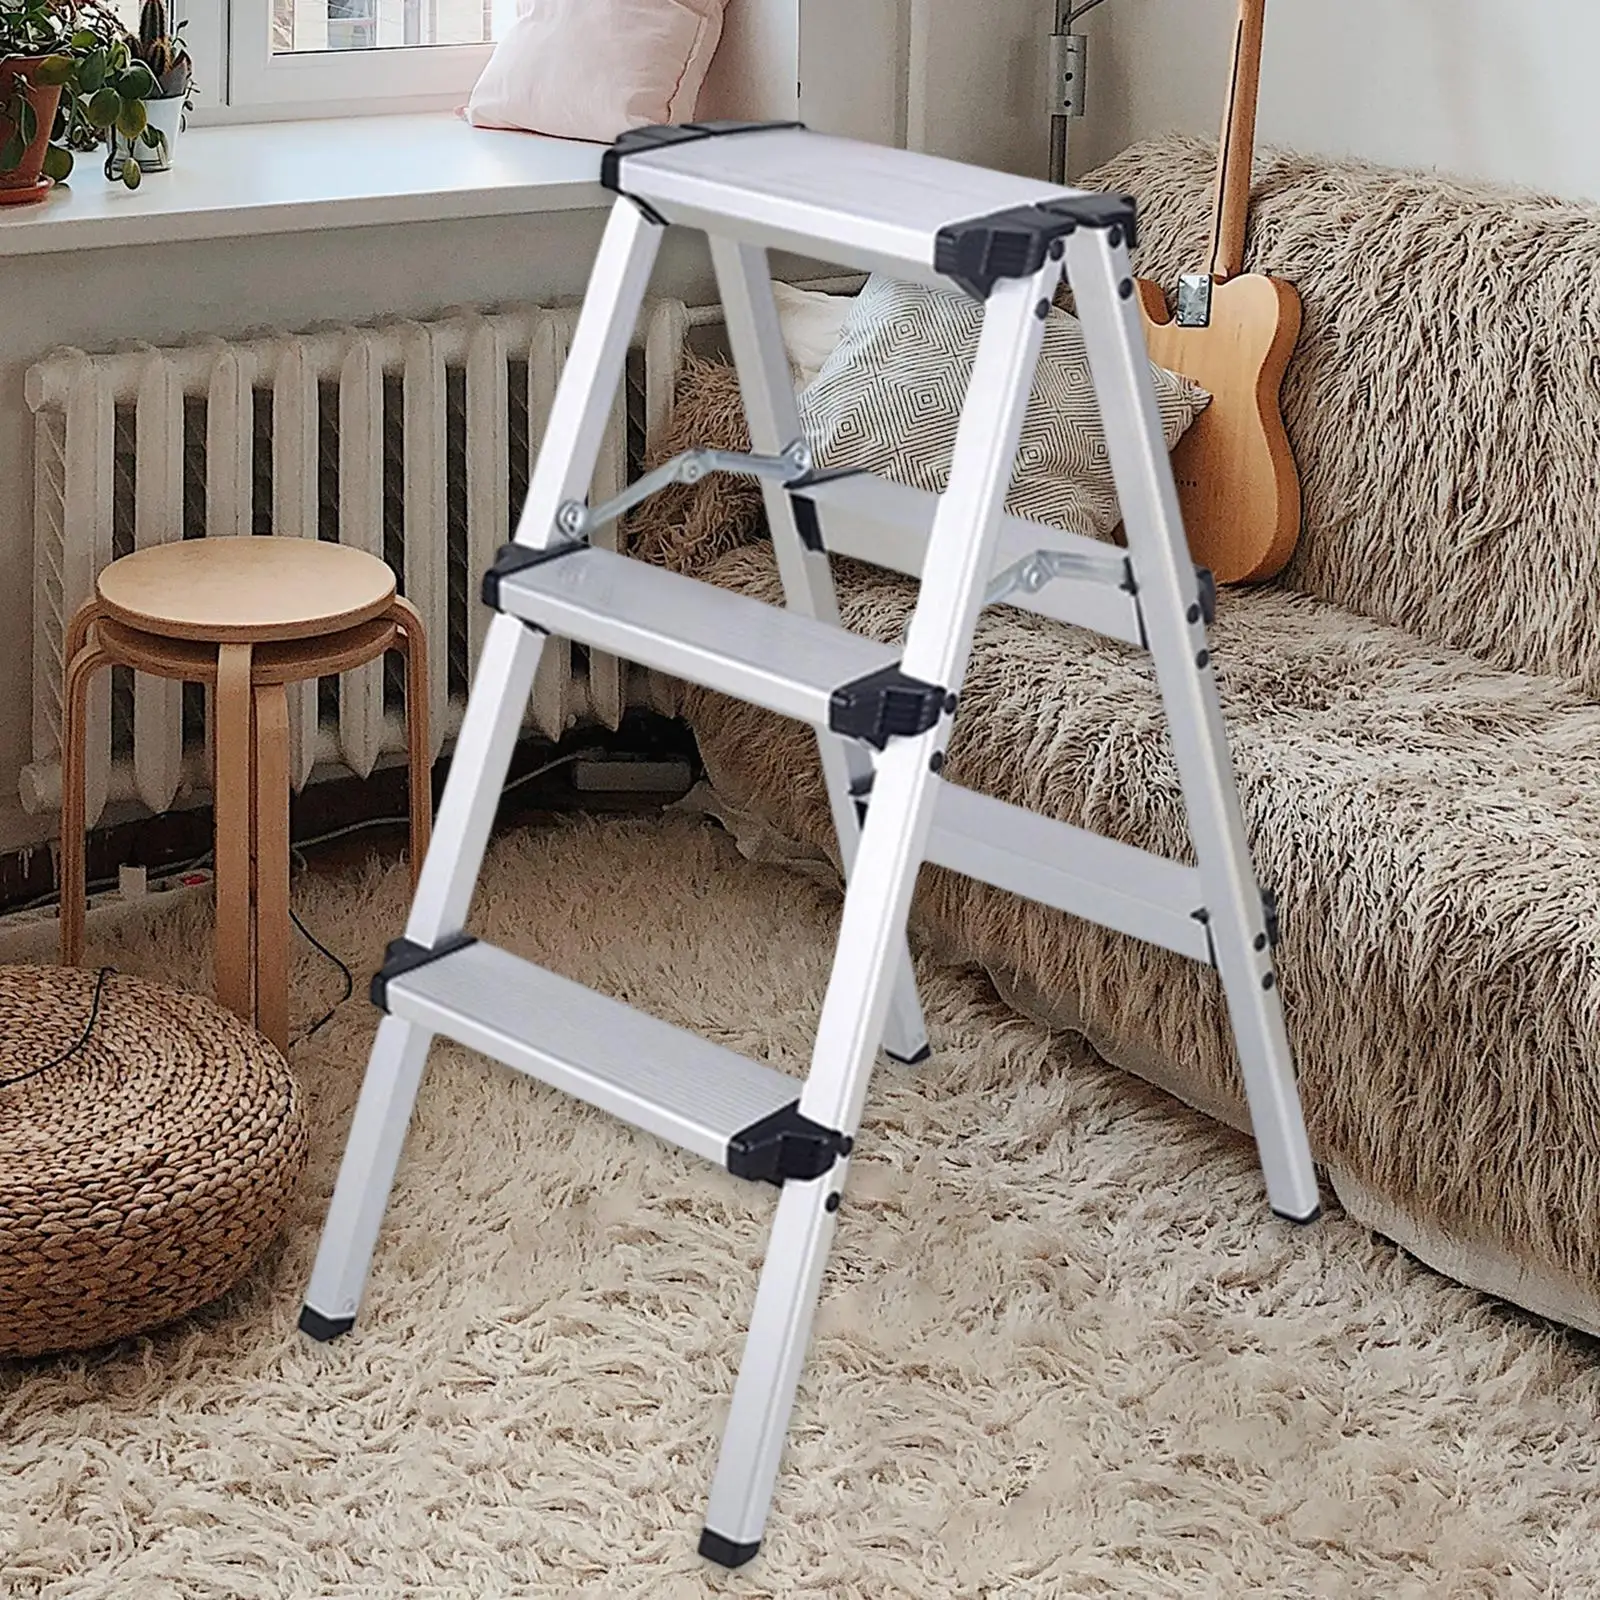 3 Step Herringbone Ladders Portable Wide Pedal for Garage Household Outdoor